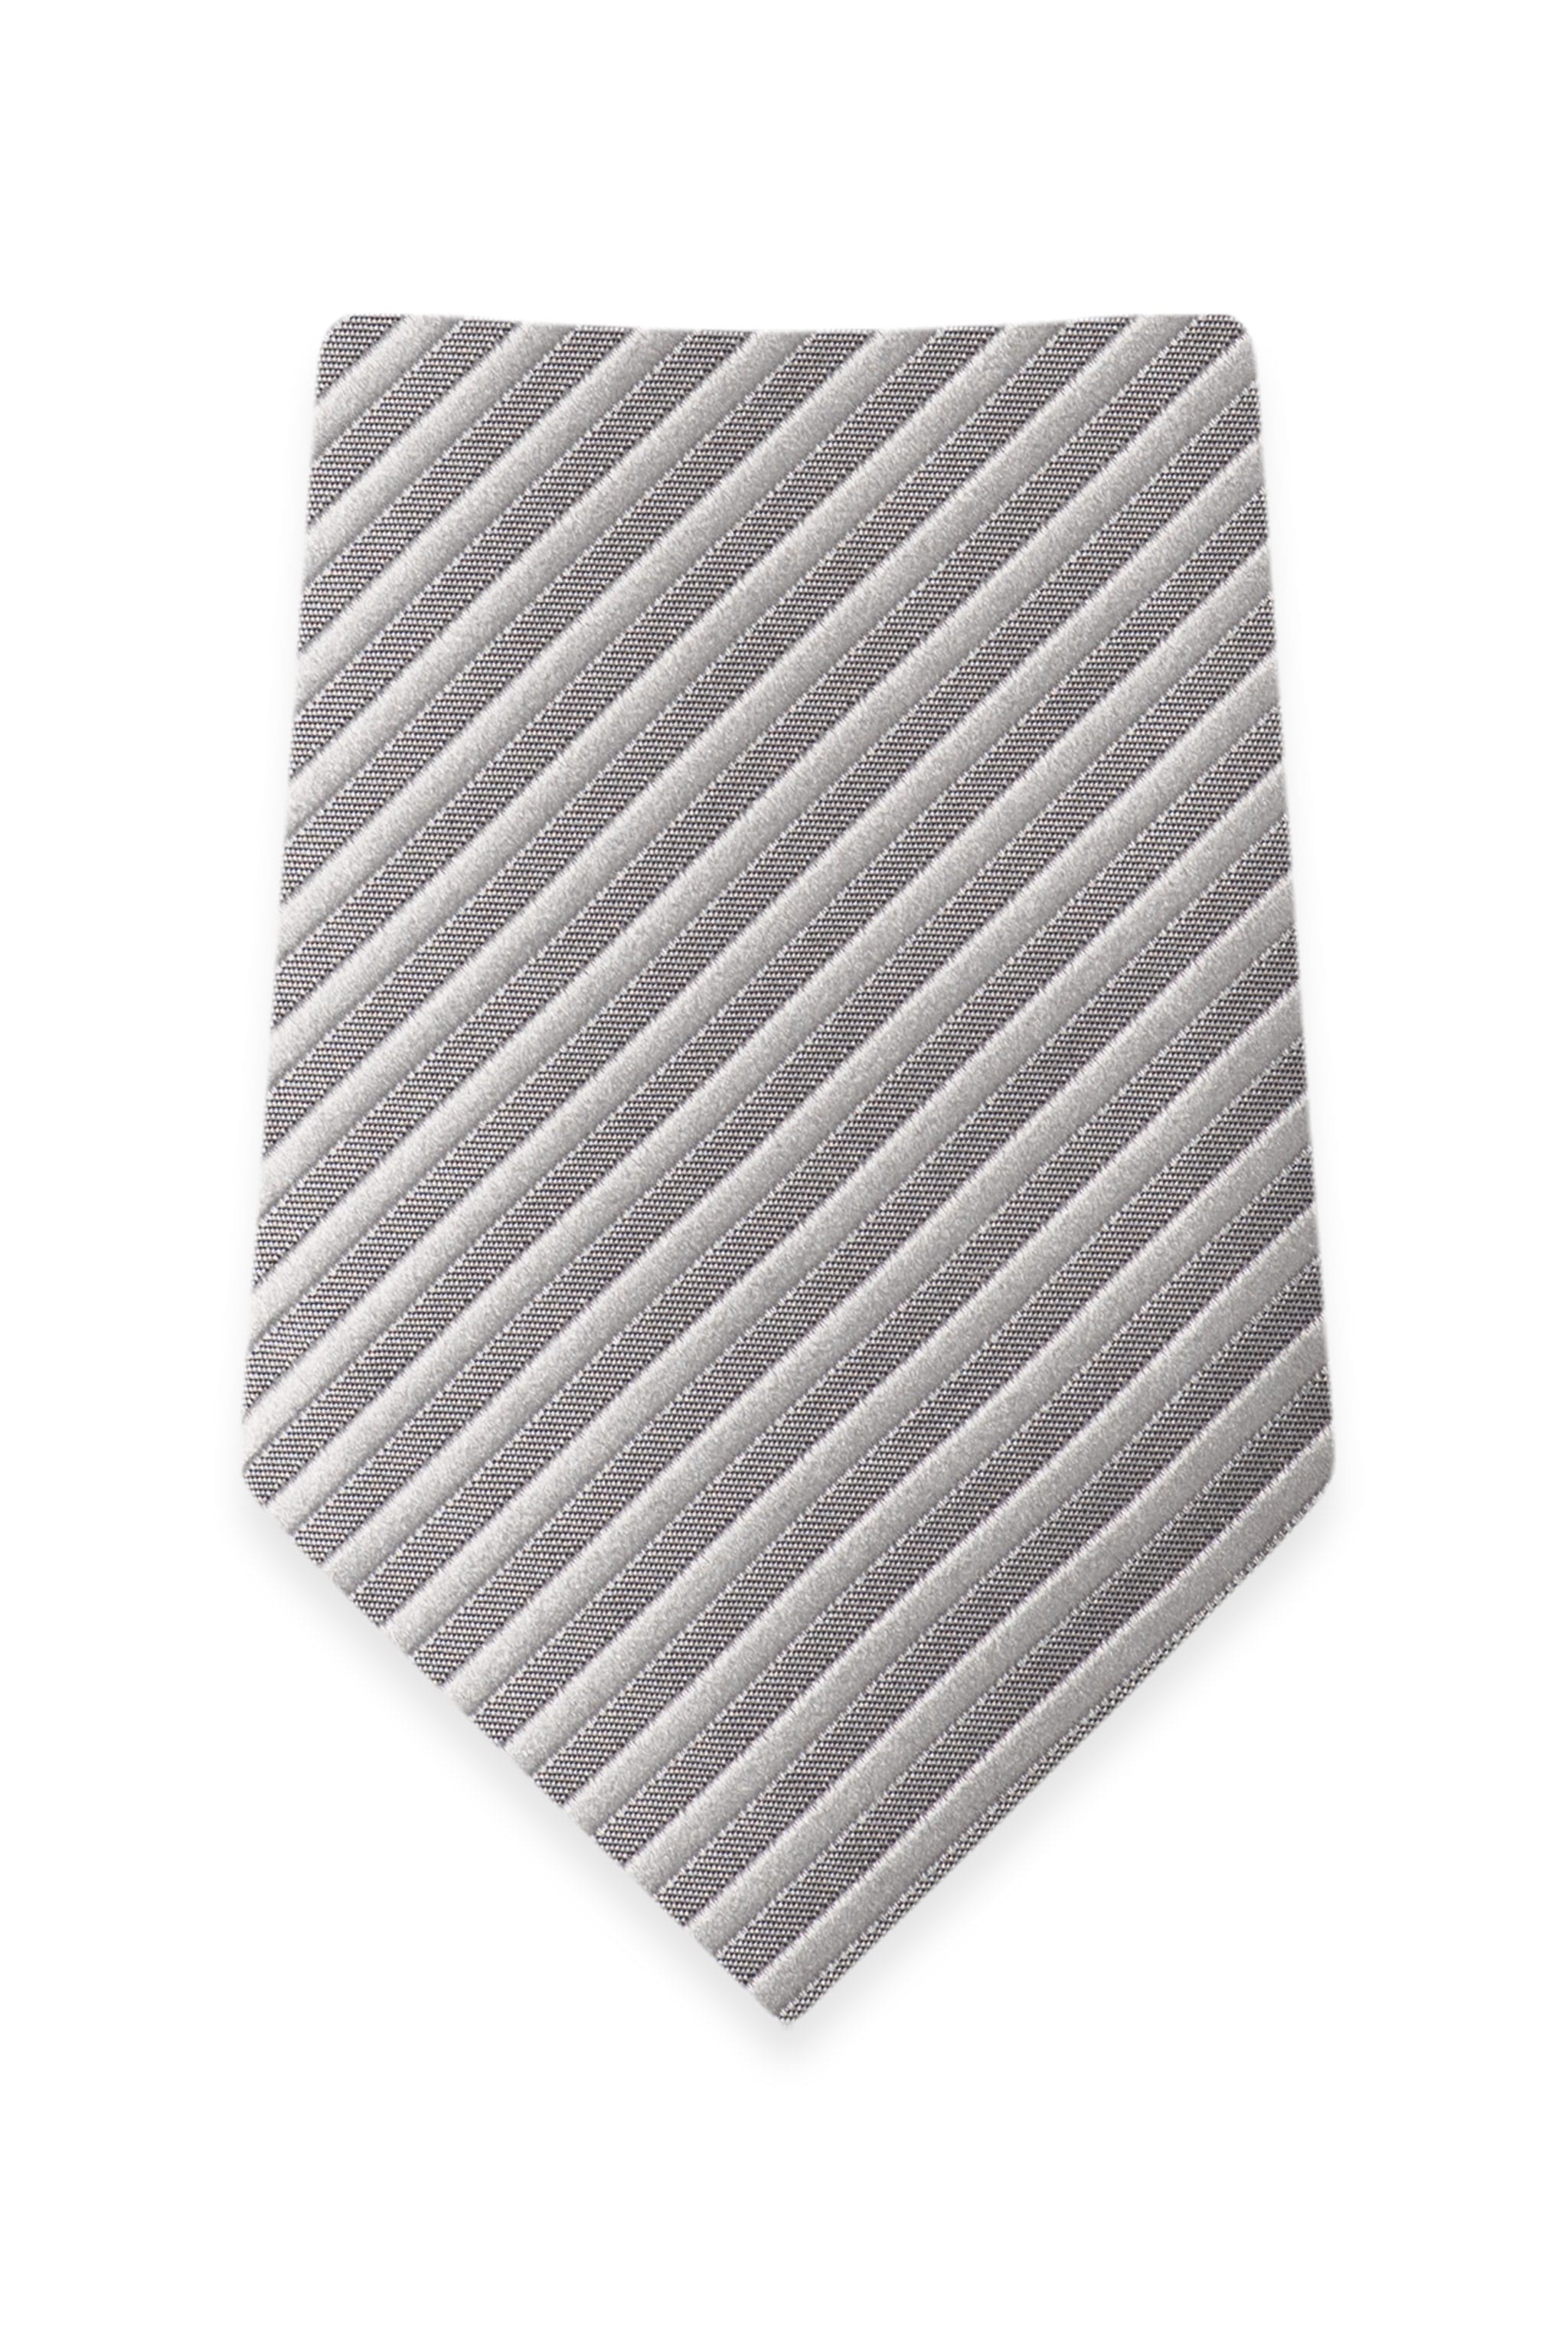 Striped Silver Self-Tie Windsor Tie